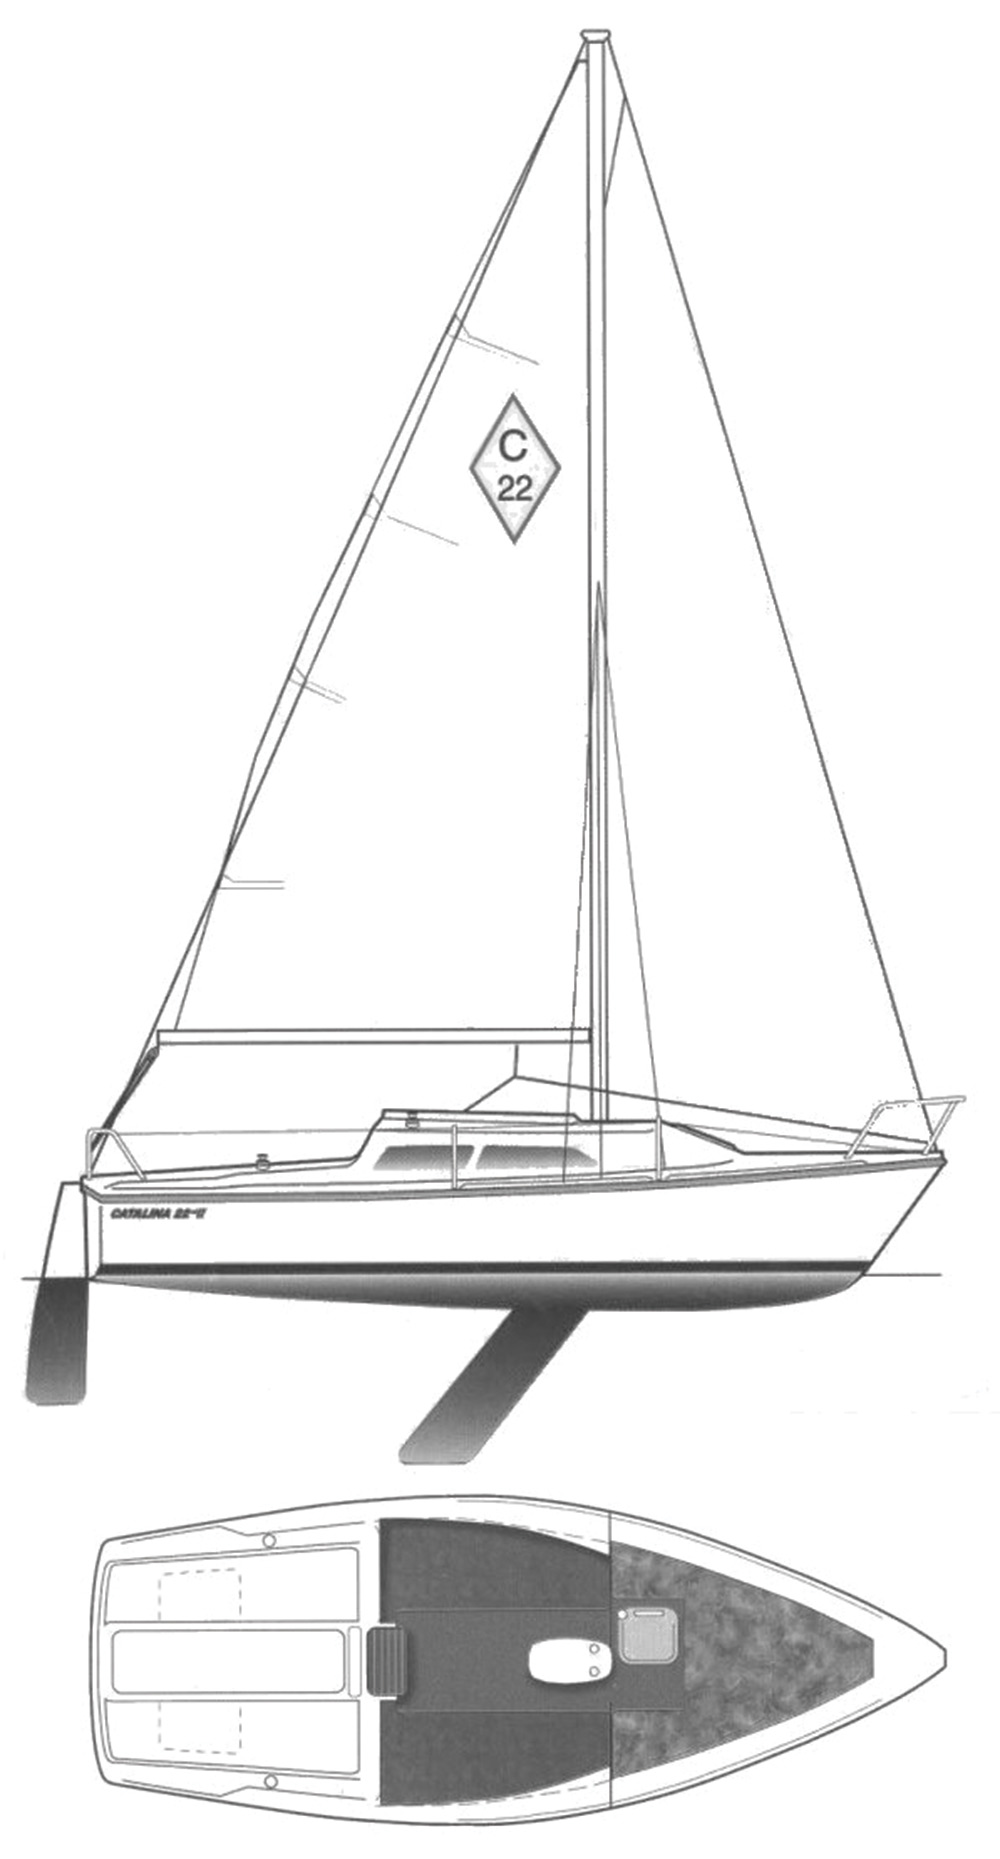 22 ft jaguar sailboat